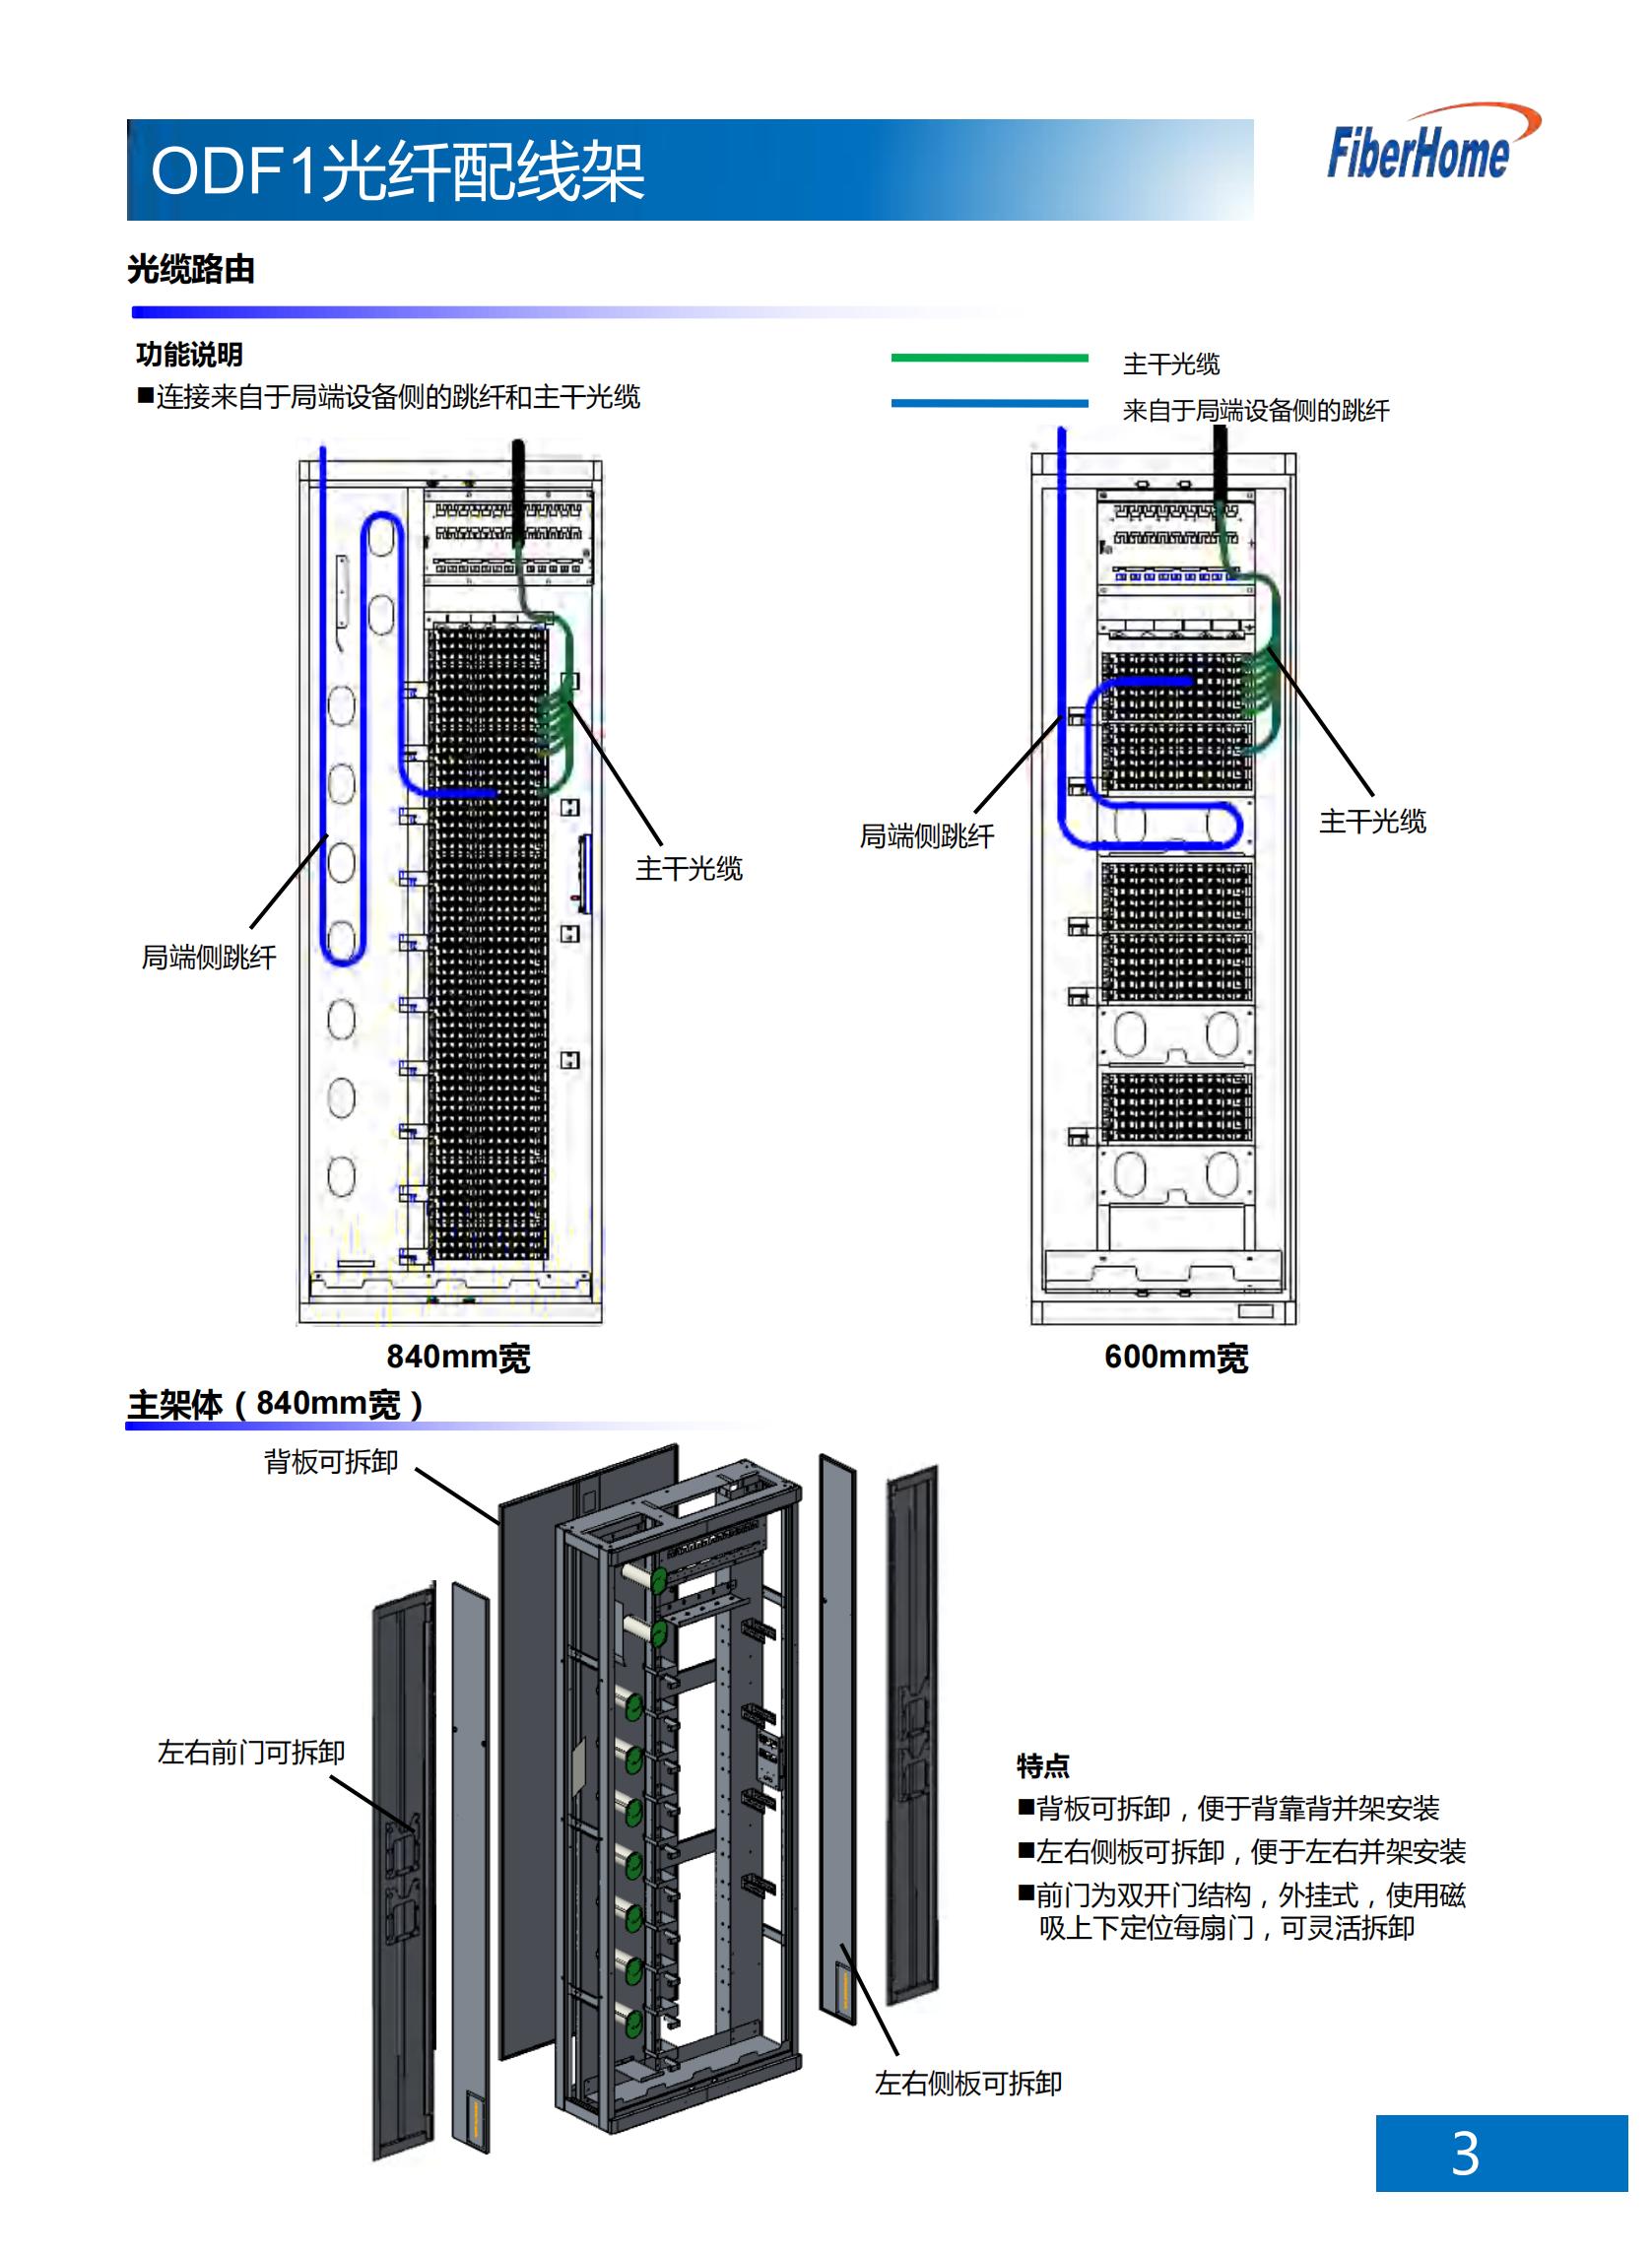 ODF101-720-A2-FC ODF optical fiber distribution frame (720-core floor-standing all include 12-core FC fusion integration unit)